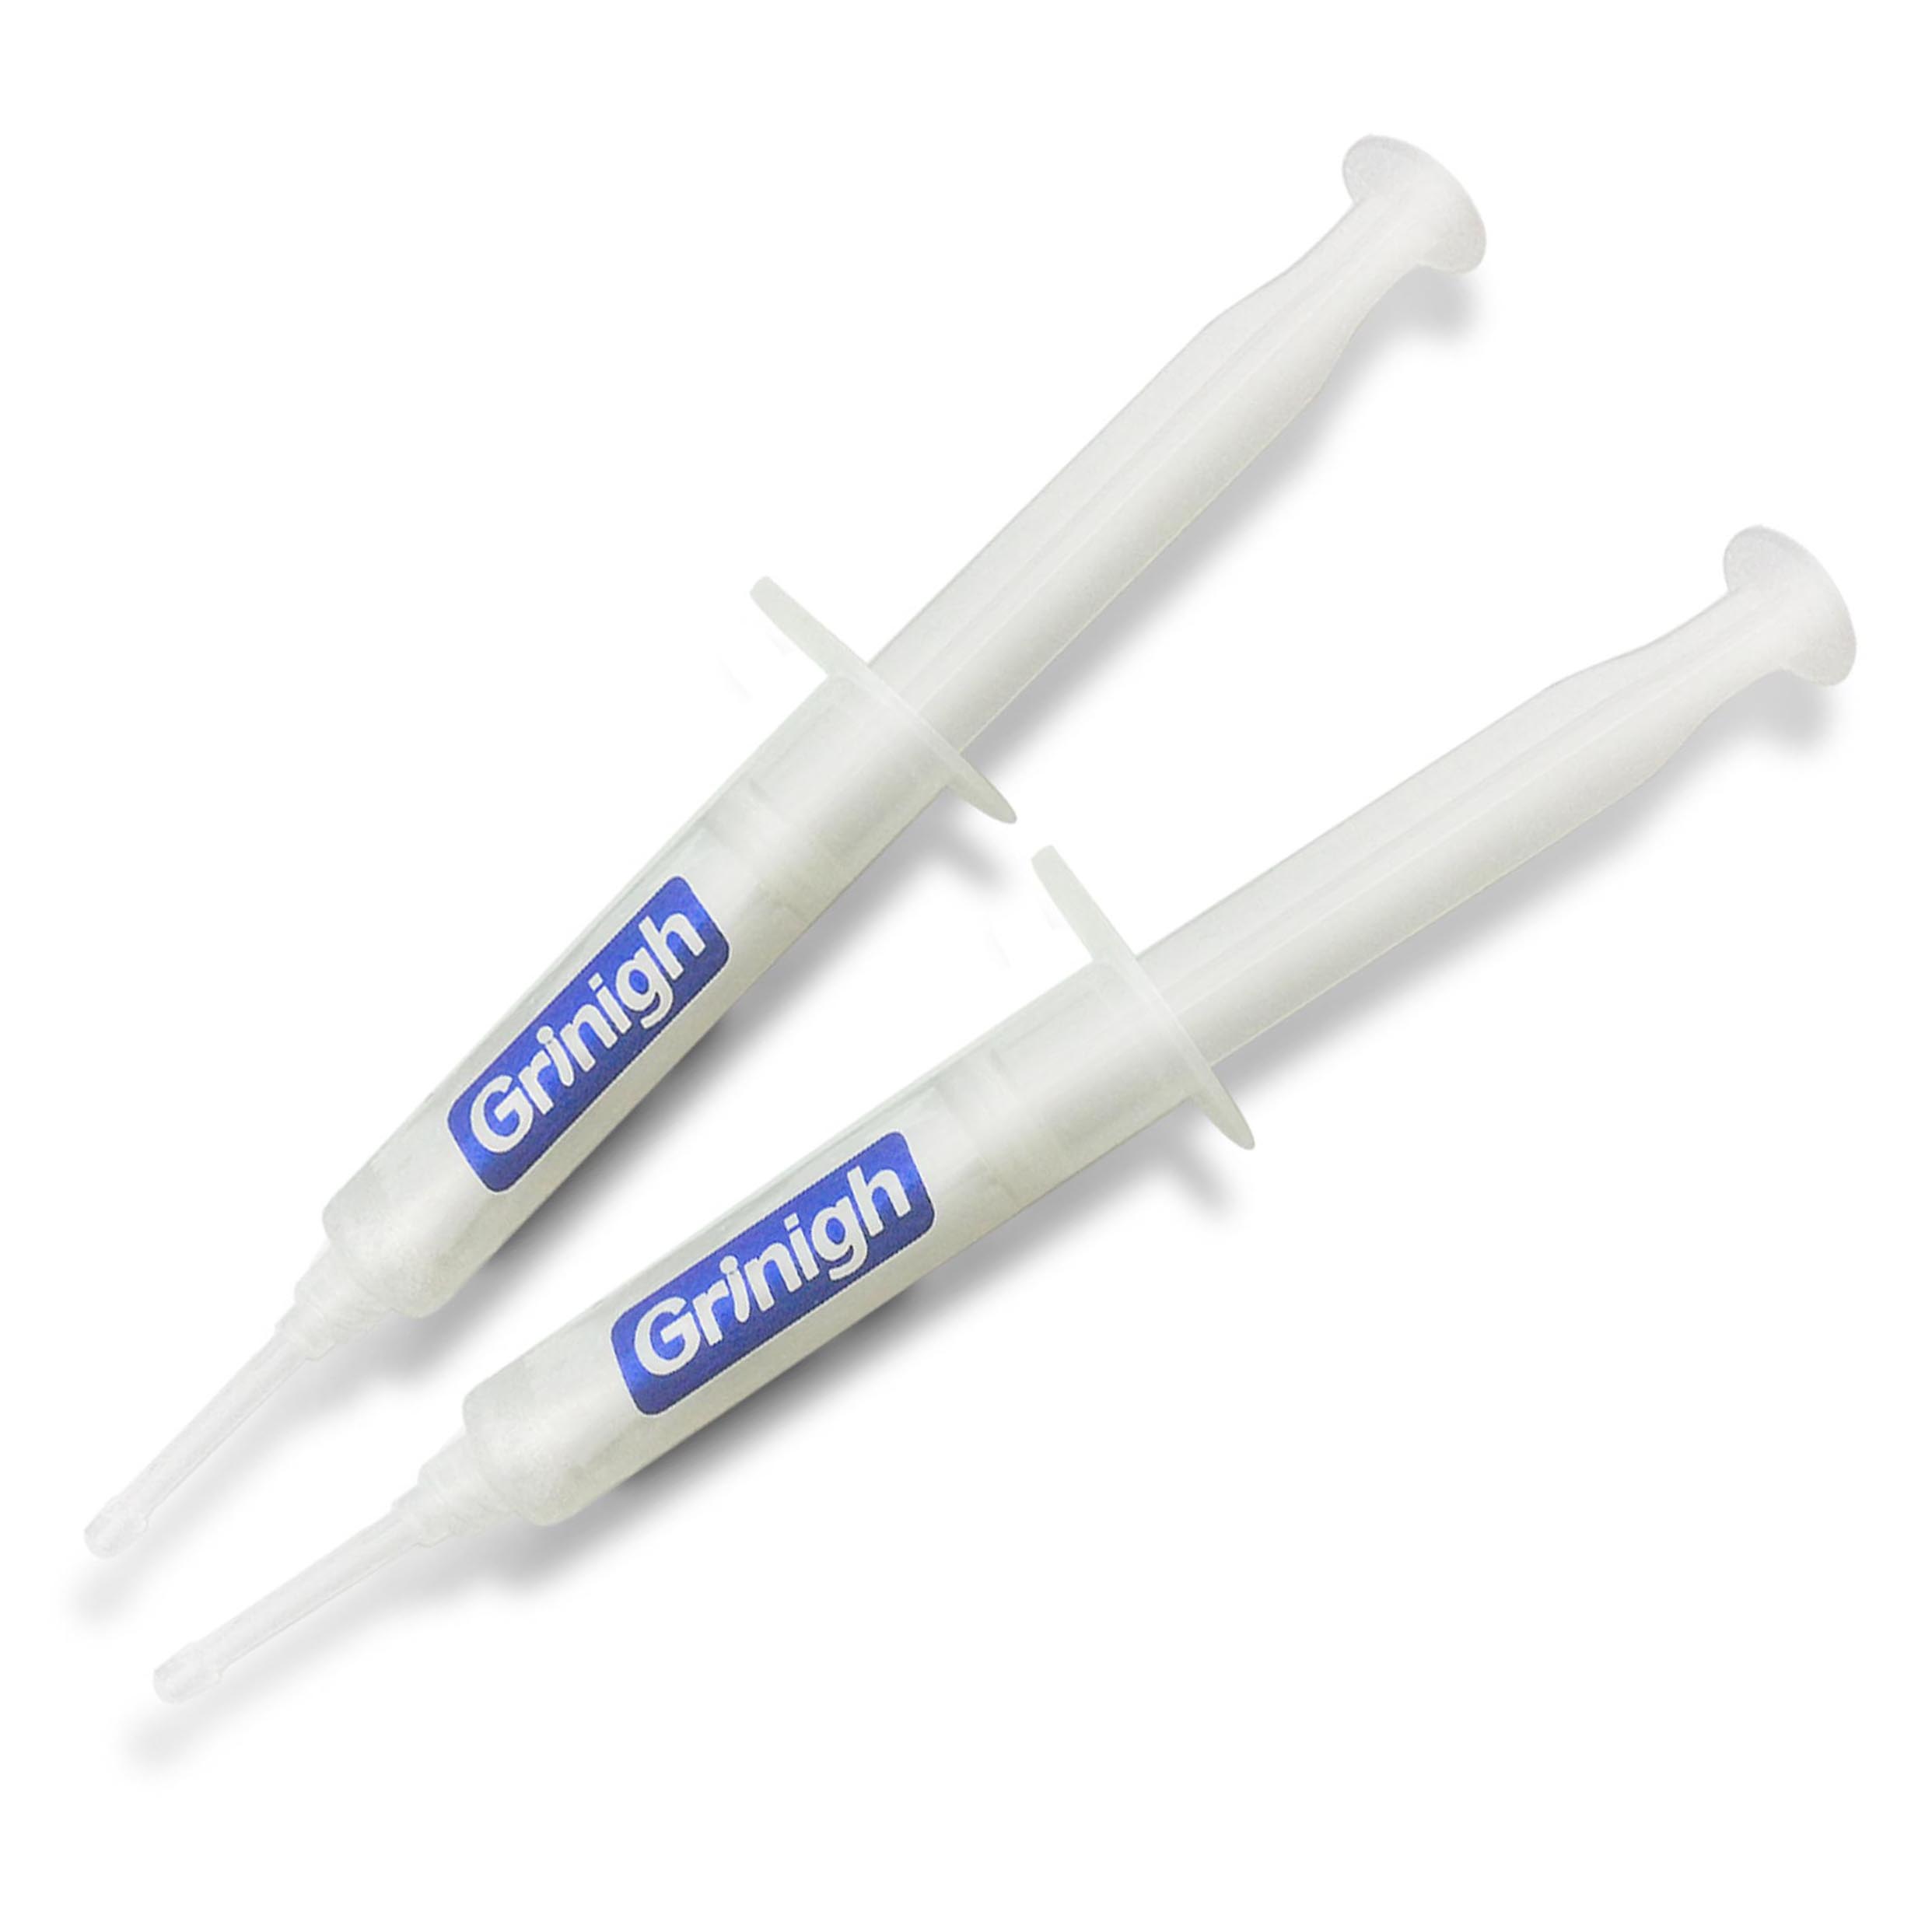 Grin365 الرئيسية تبييض الأسنان النظام مع لينة غير تغلي الفم الصواني - أساسيات 2 شخص كيت